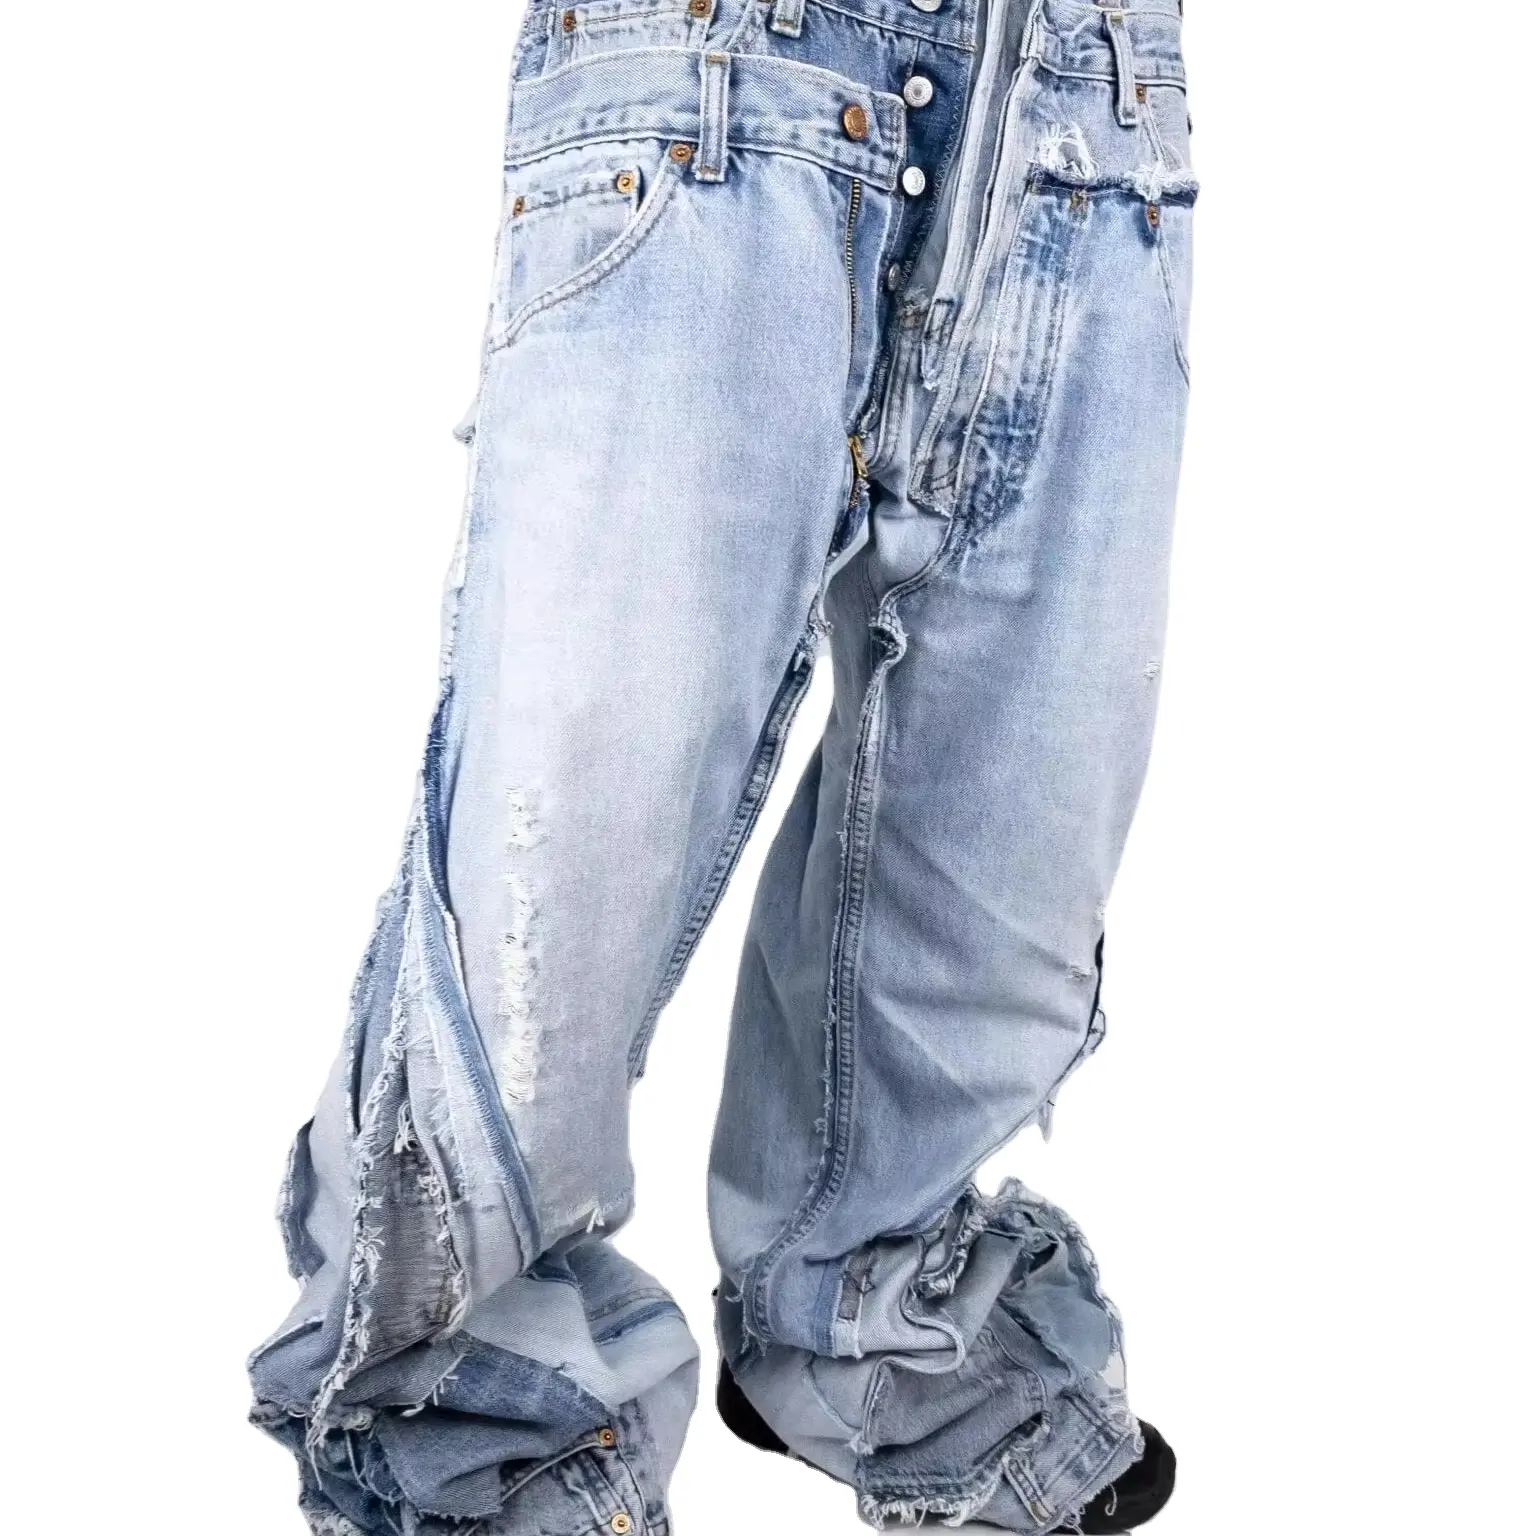 Zhuoyang produsen Denim garmen celana Jeans pria bertumpuk, celana biru mode jalanan desain kustom